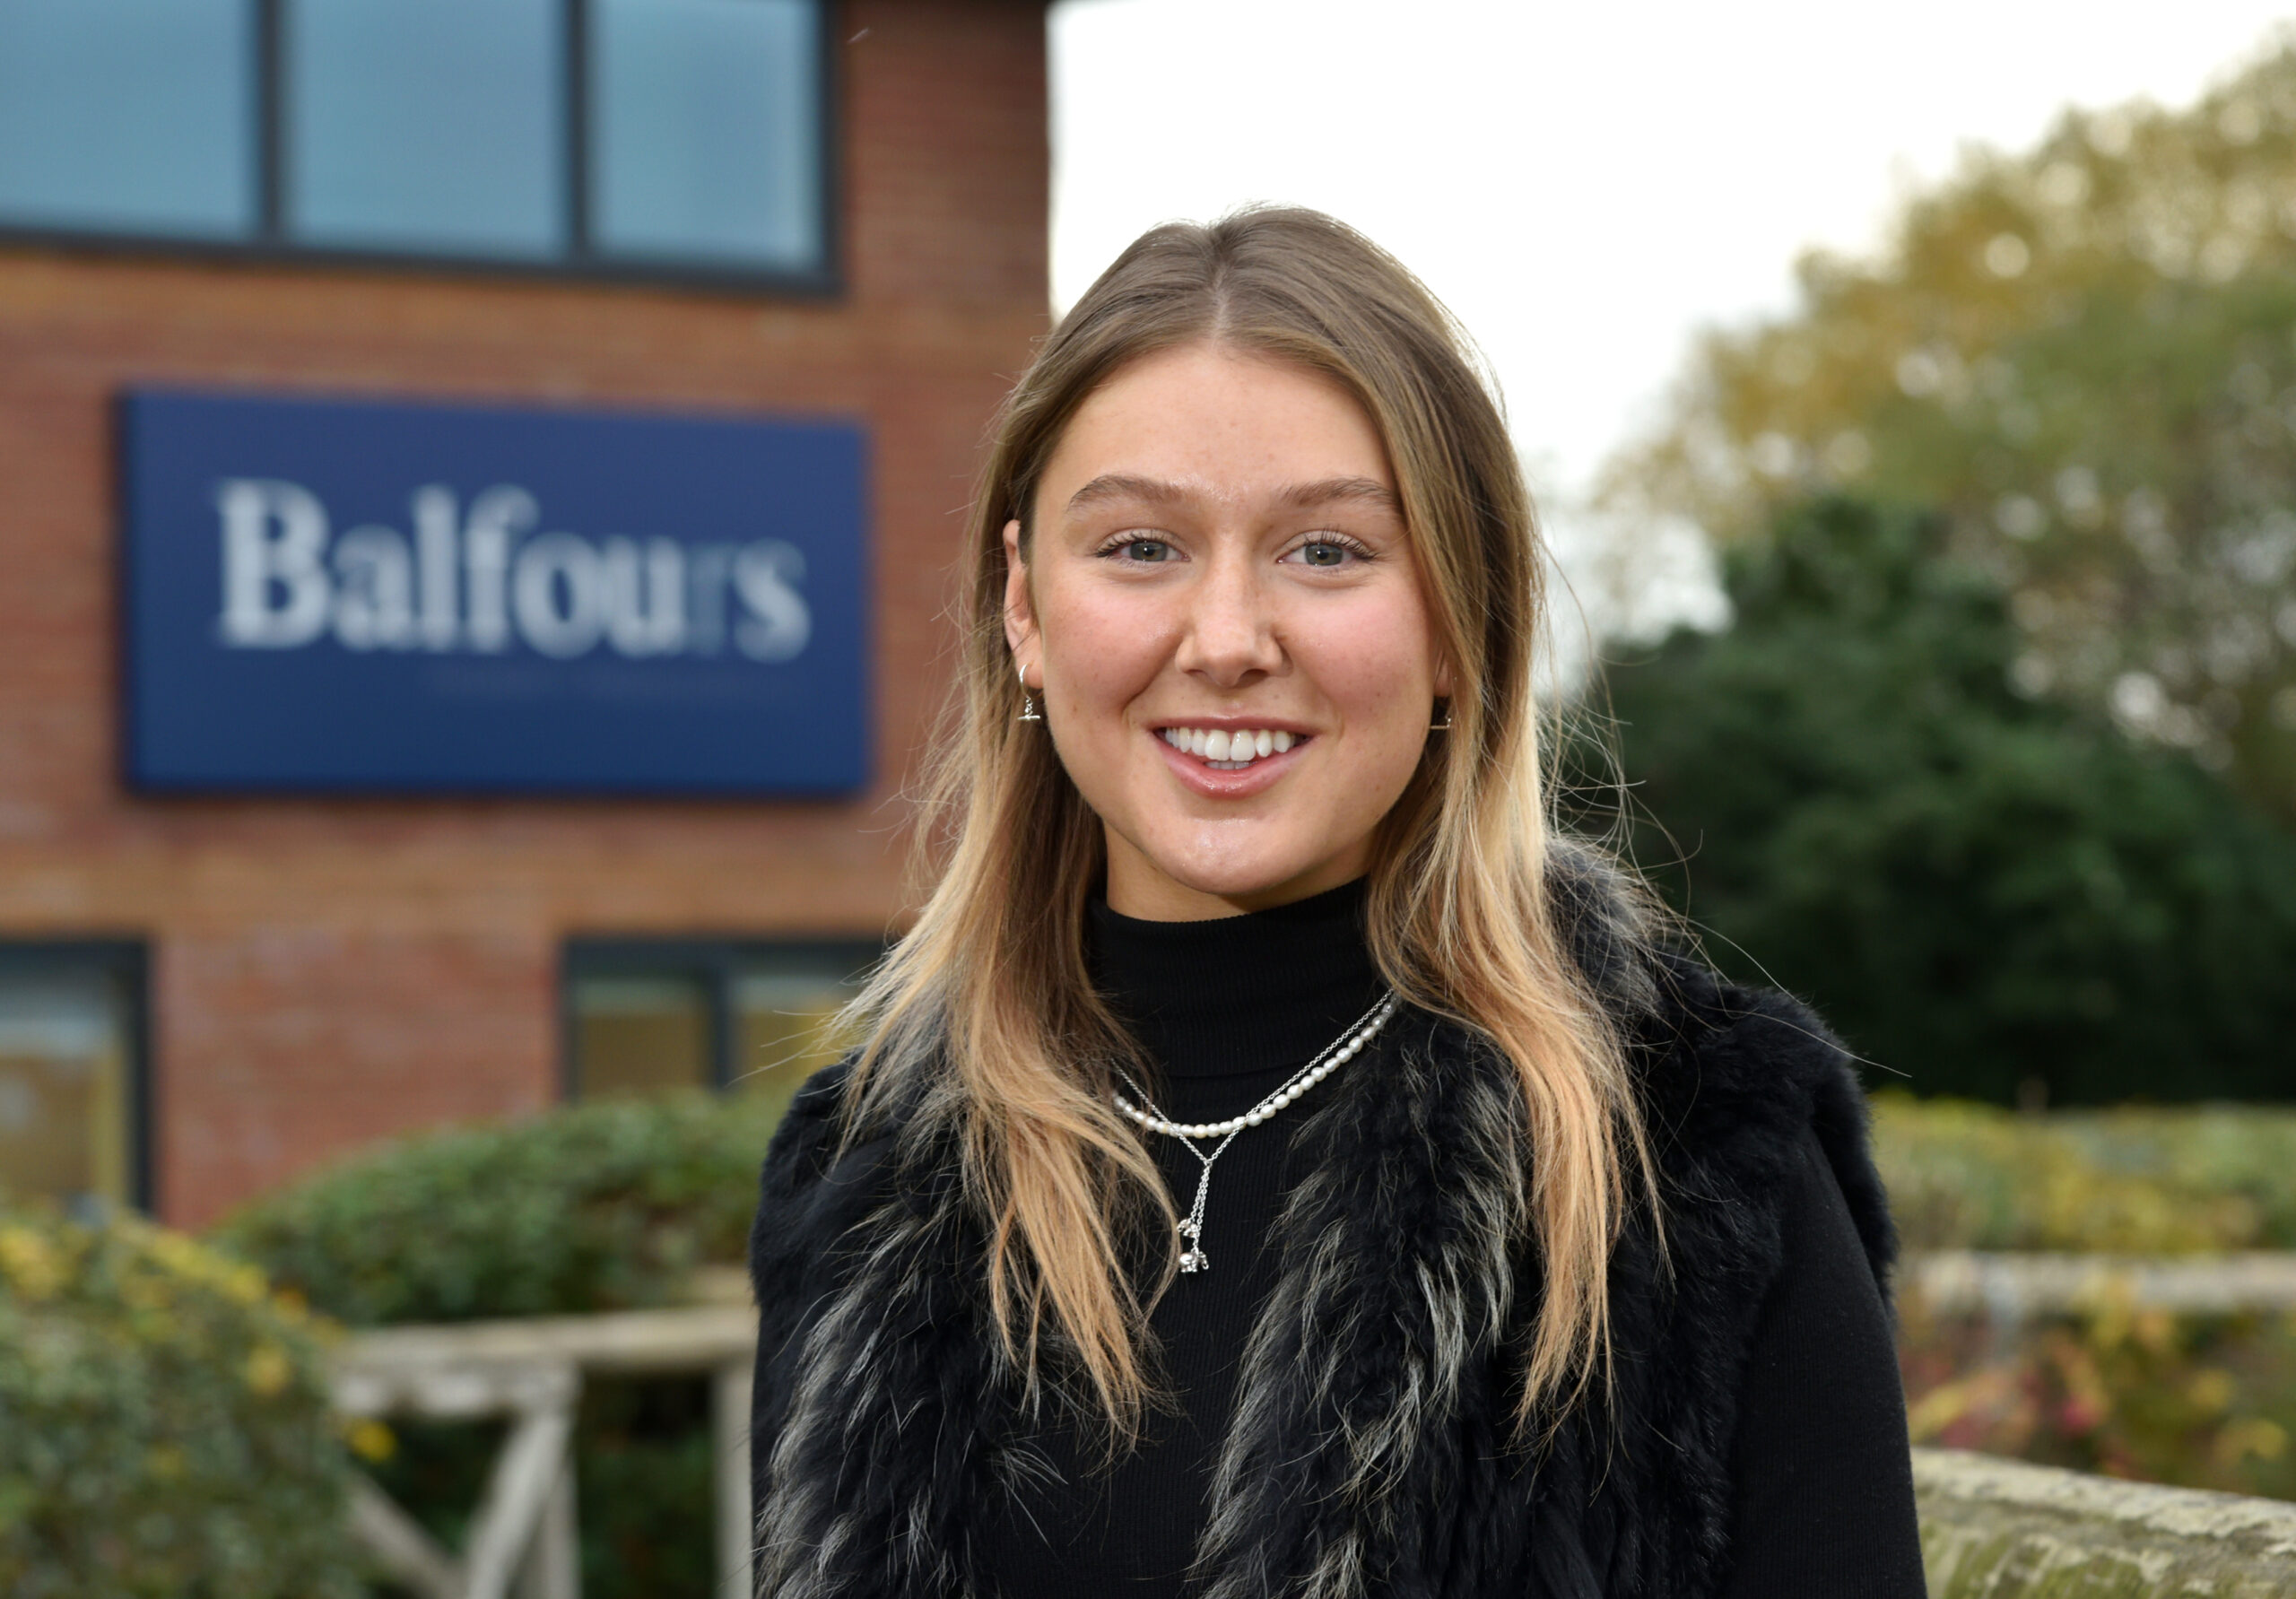 Returning to Shropshire, Clarissa joins Balfours